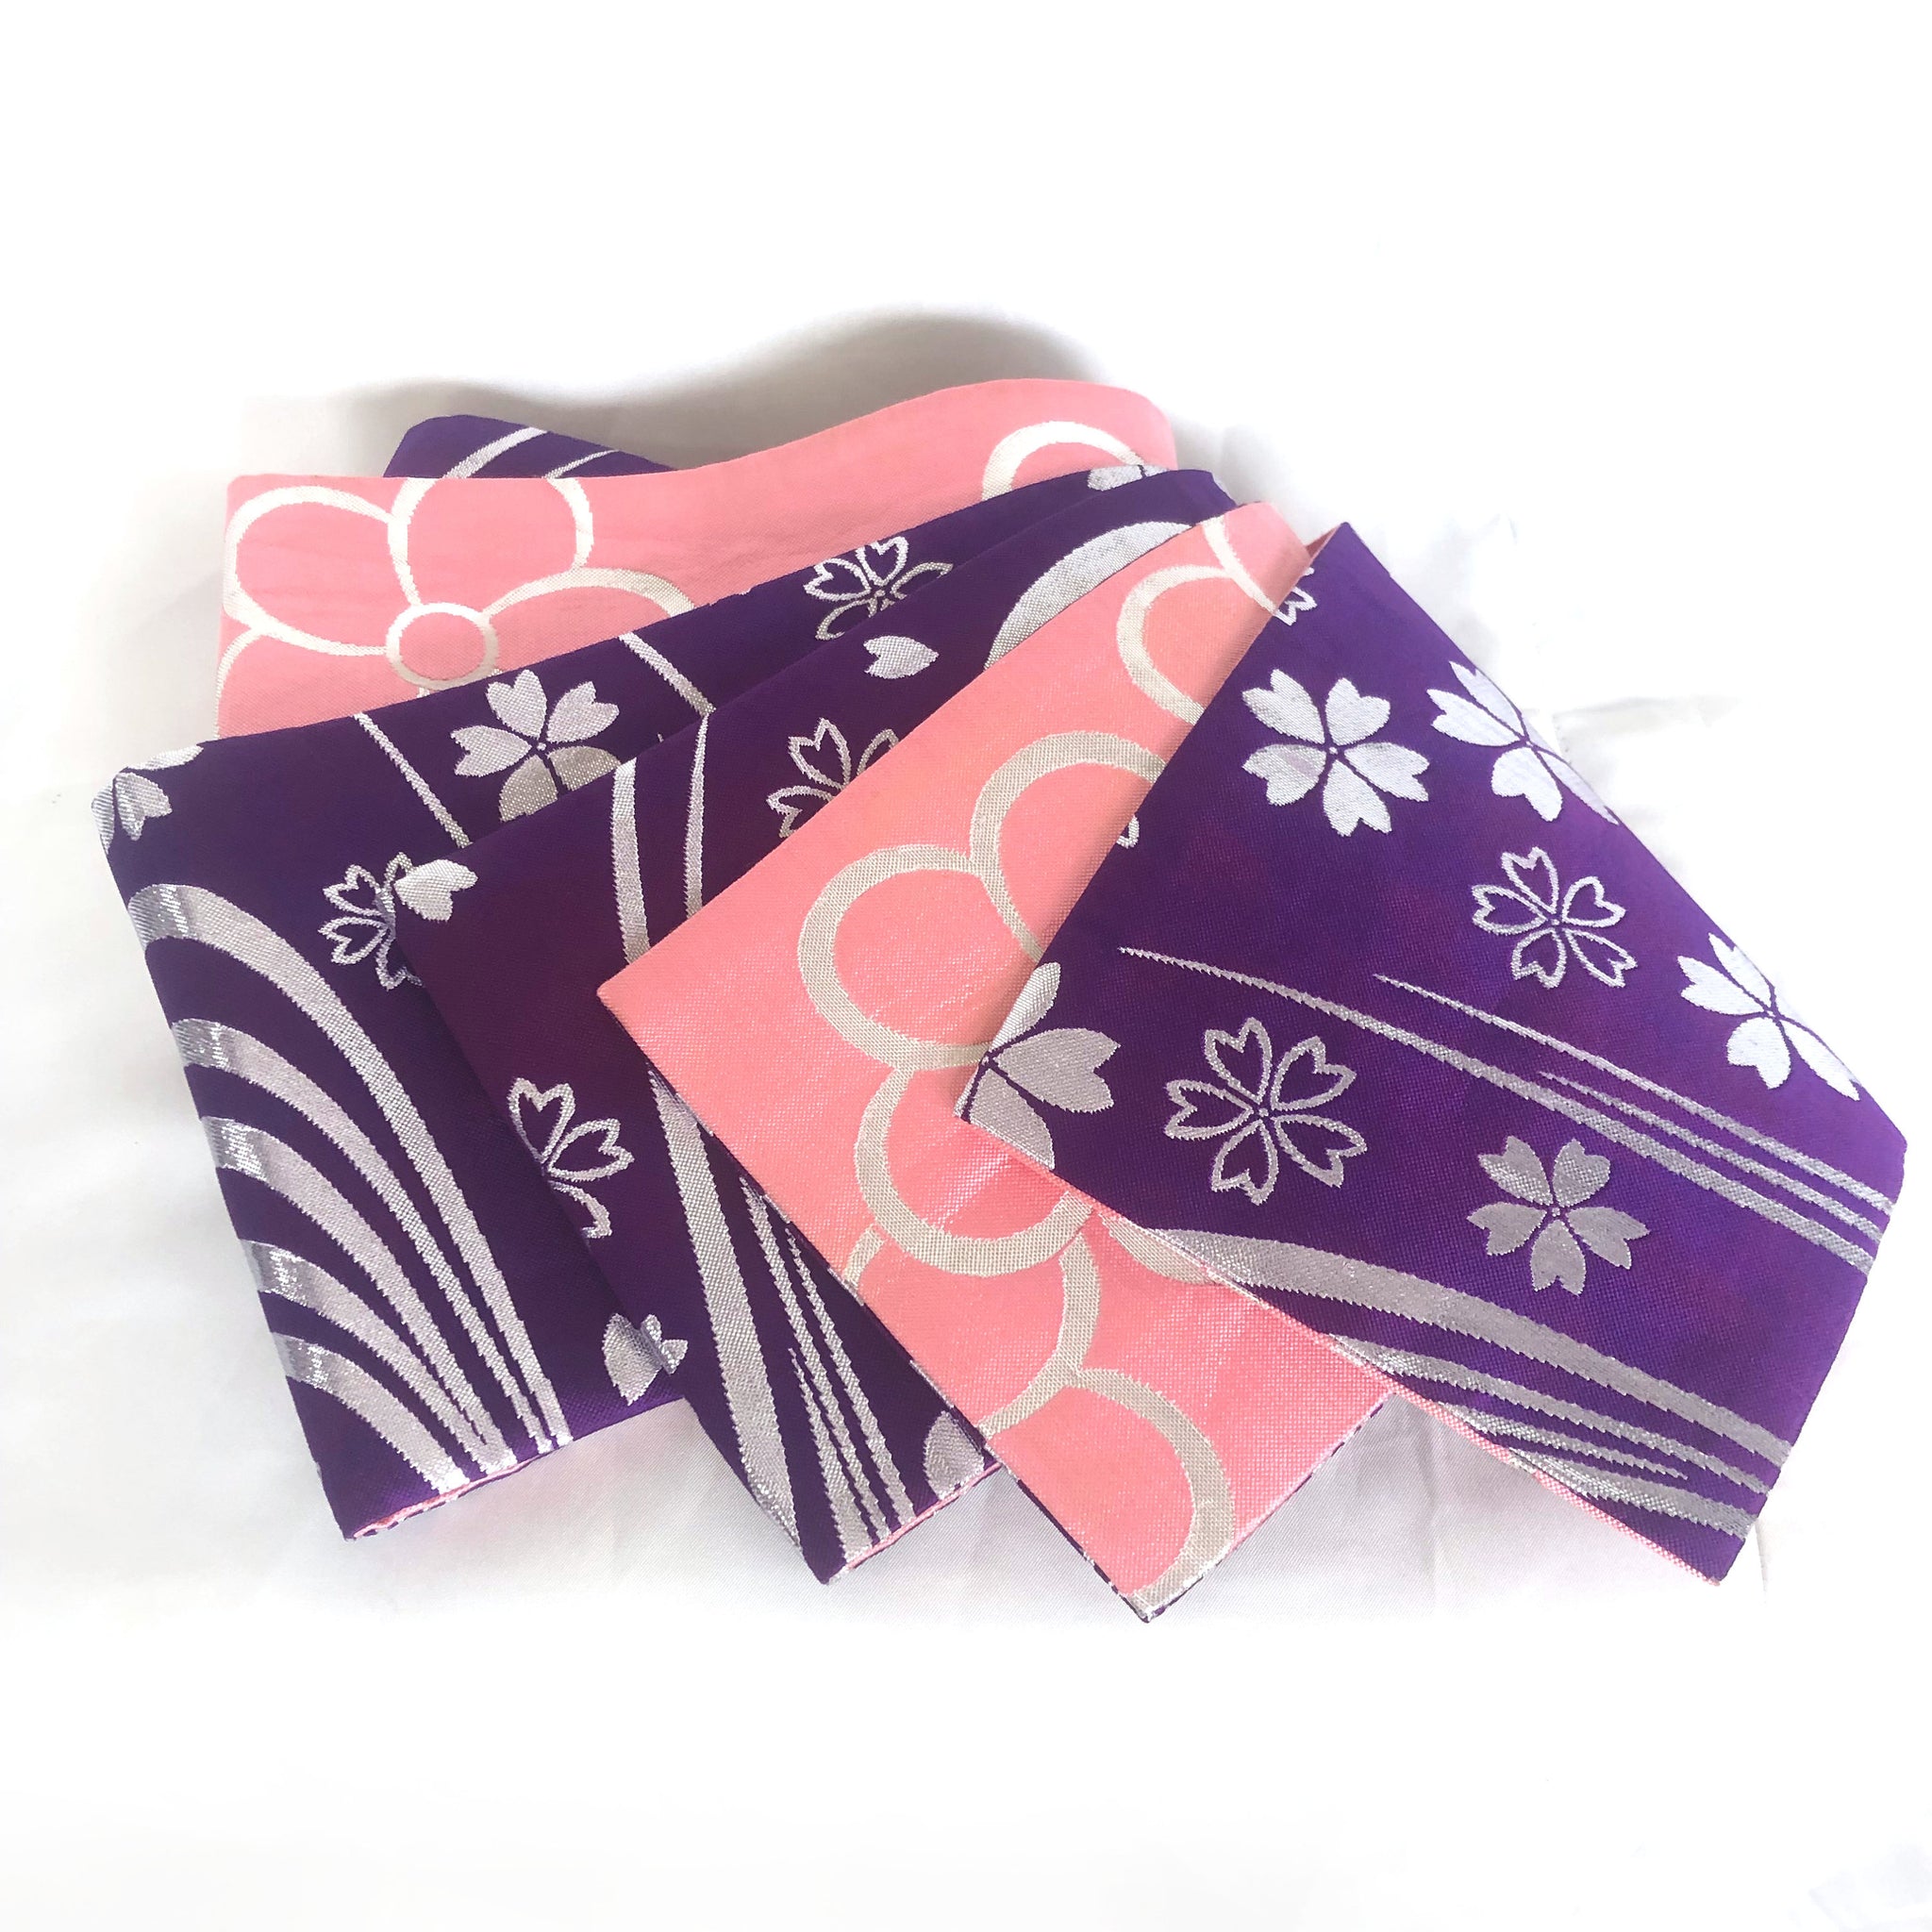 Shiny reversible Japanese hanhaba obi - pink and purple with silver sakura flowers - obi for dancing